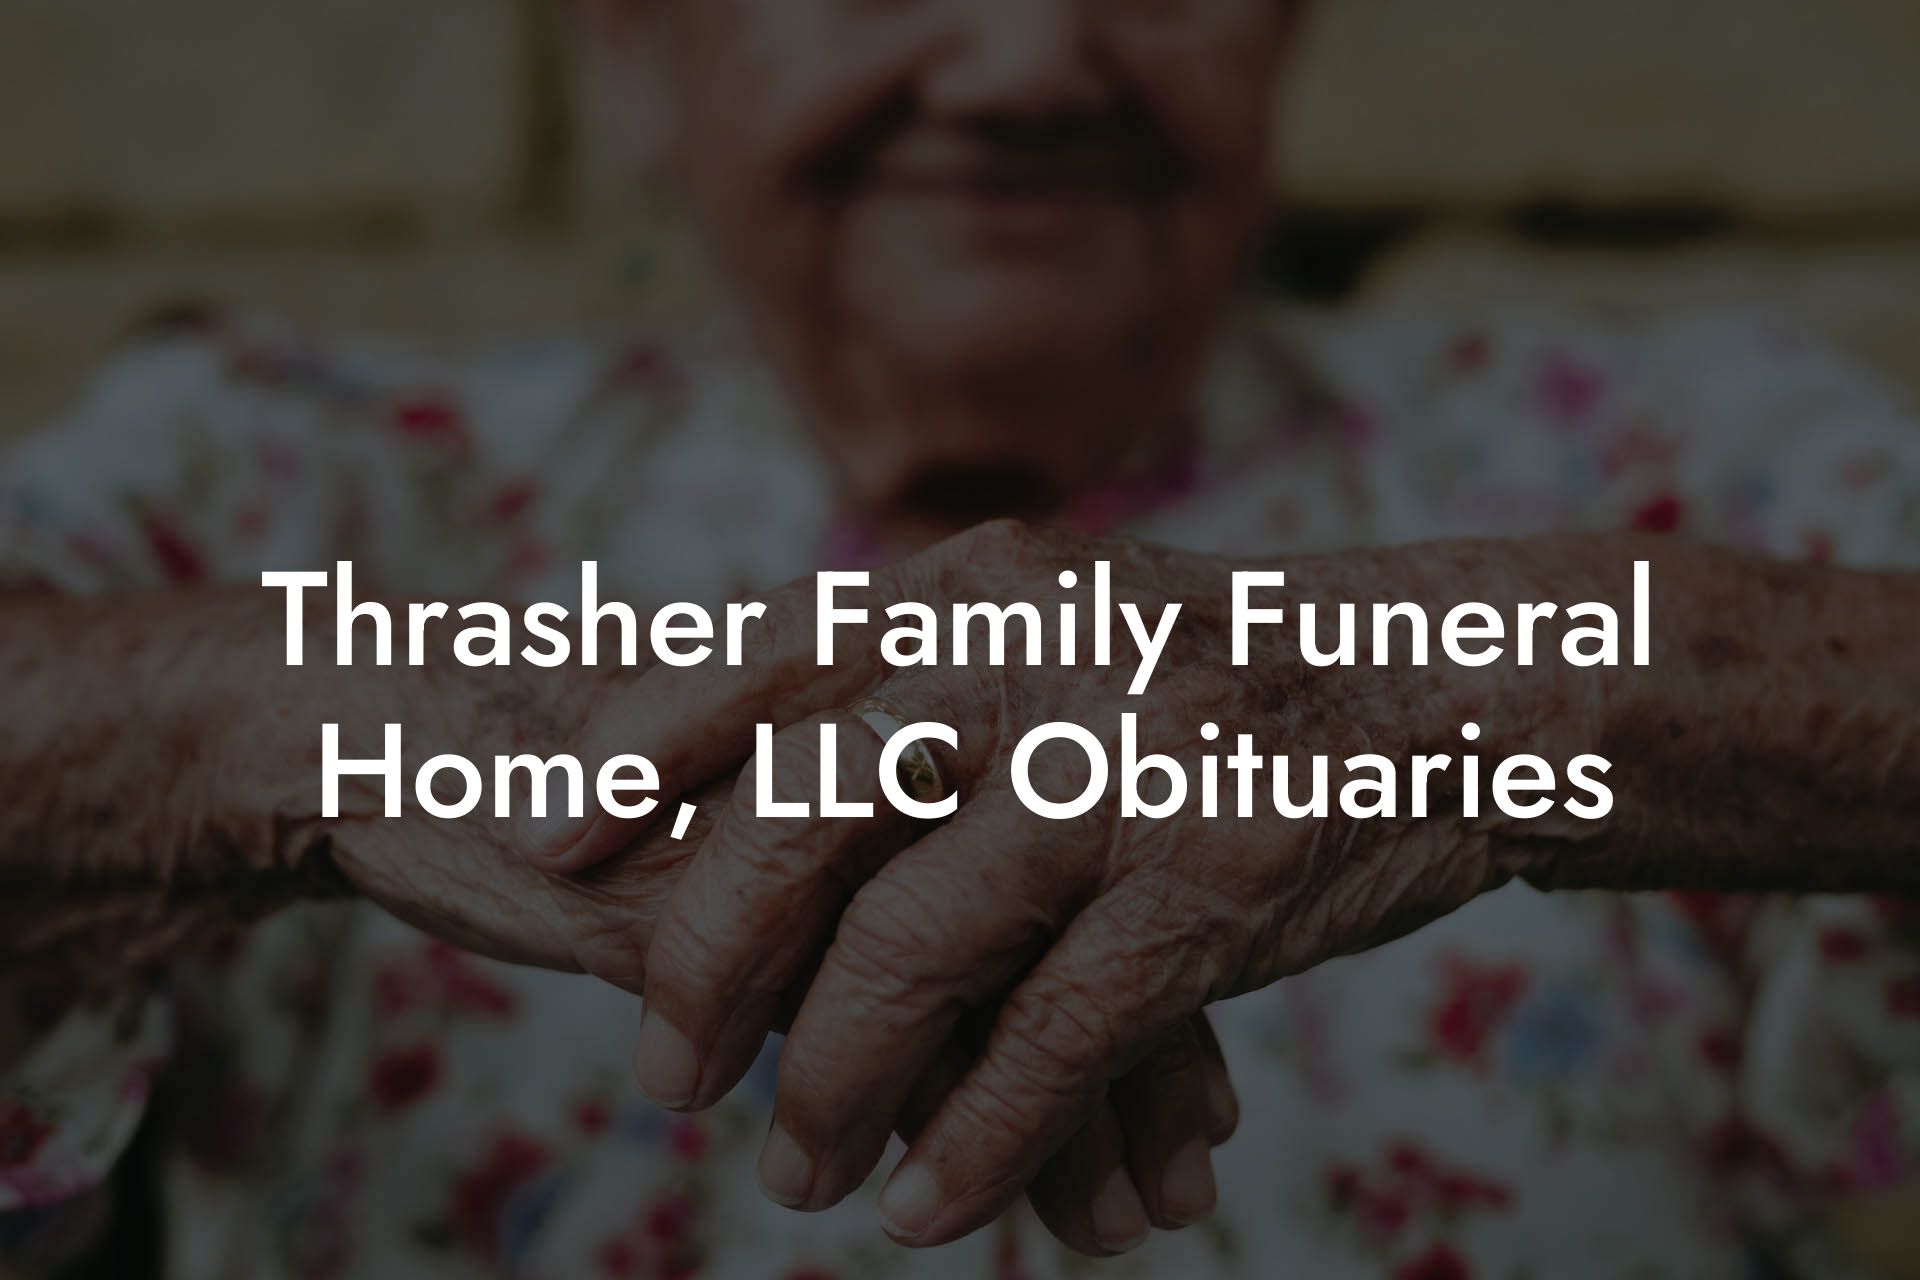 Thrasher Family Funeral Home, LLC Obituaries